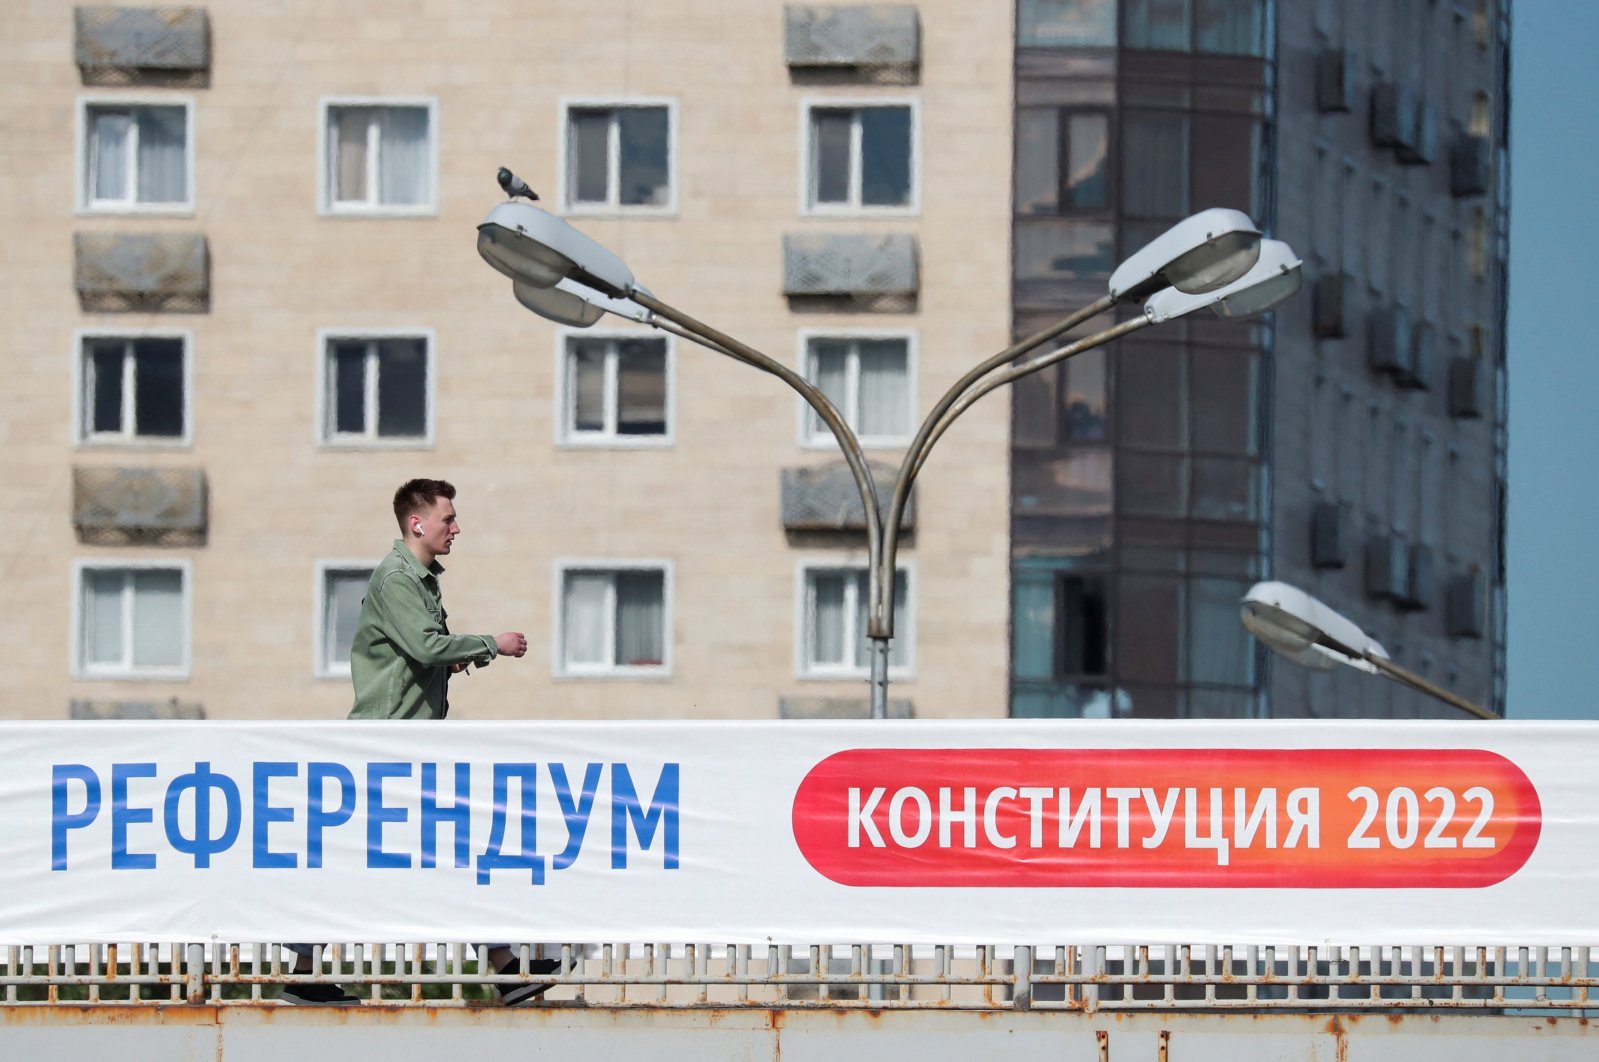 A man walks along a bridge near a banner informing of the upcoming referendum in Almaty, Kazakhstan, June 1, 2022. (Reuters Photo)